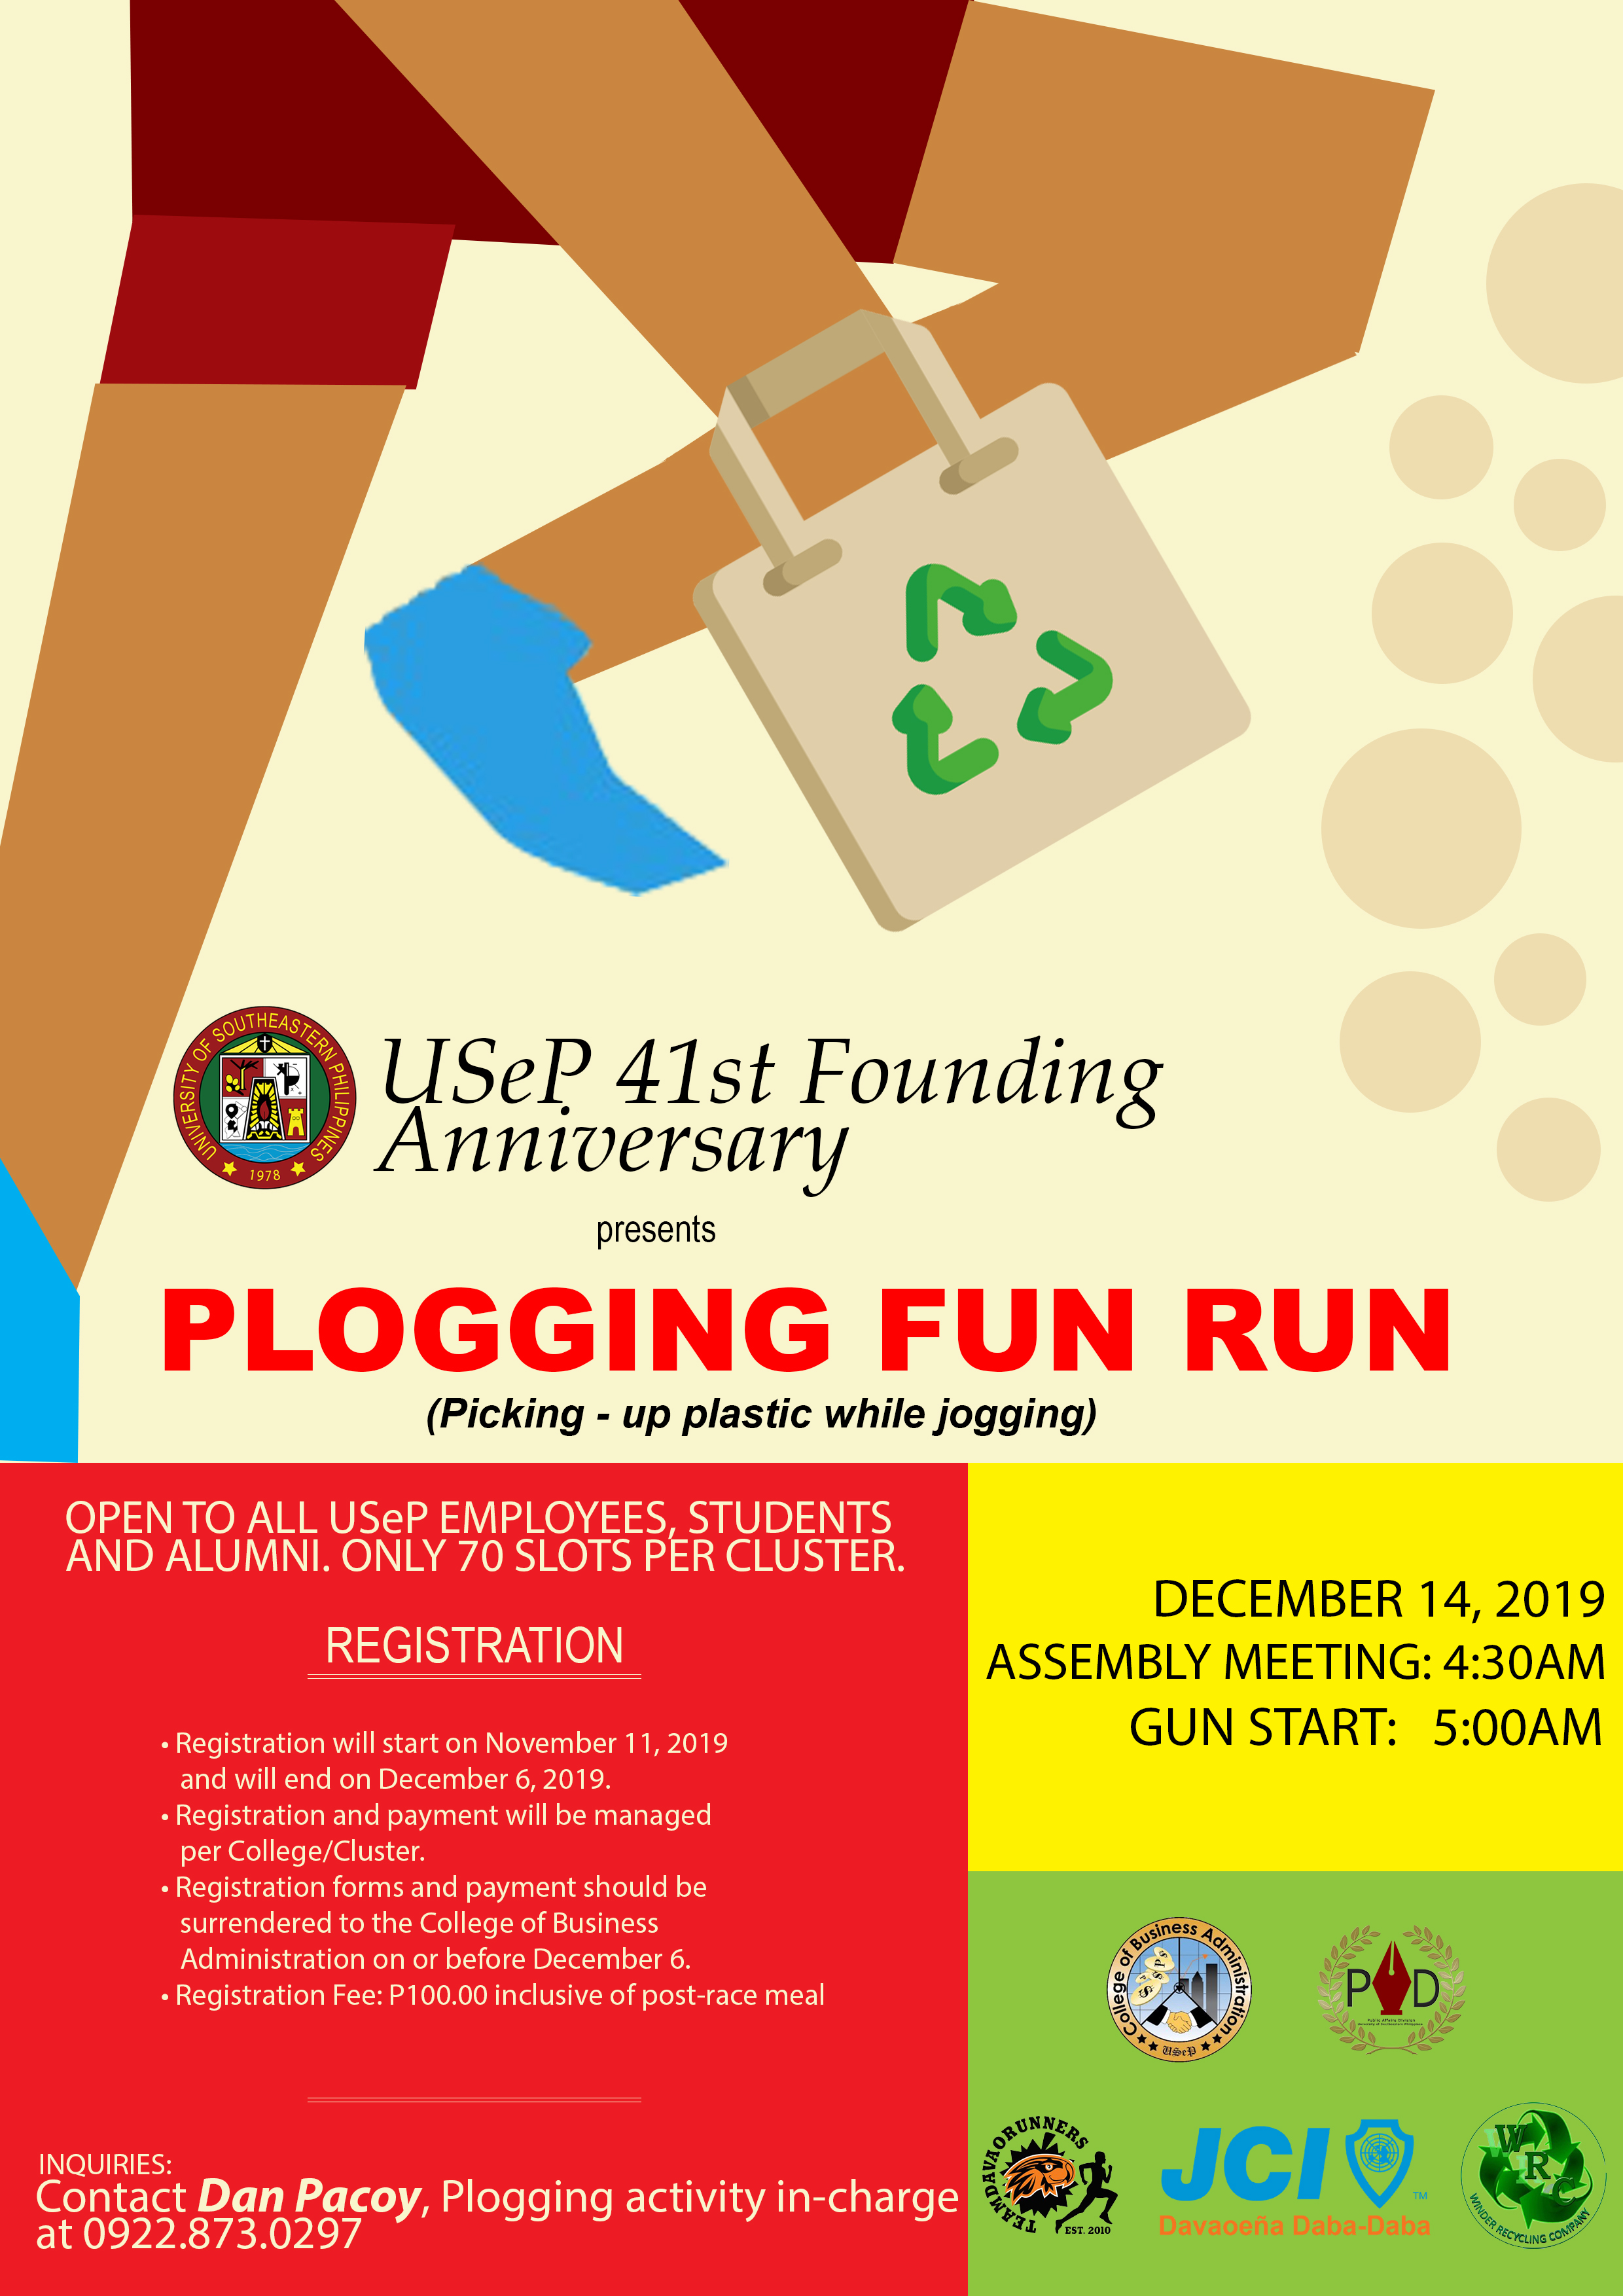 USEP 41st FOUNDING ANNIVERSARY CELEBRATION  presents  PLOGGING (Picking-Up Plastic while Jogging) Fun Run  December 14, 2019